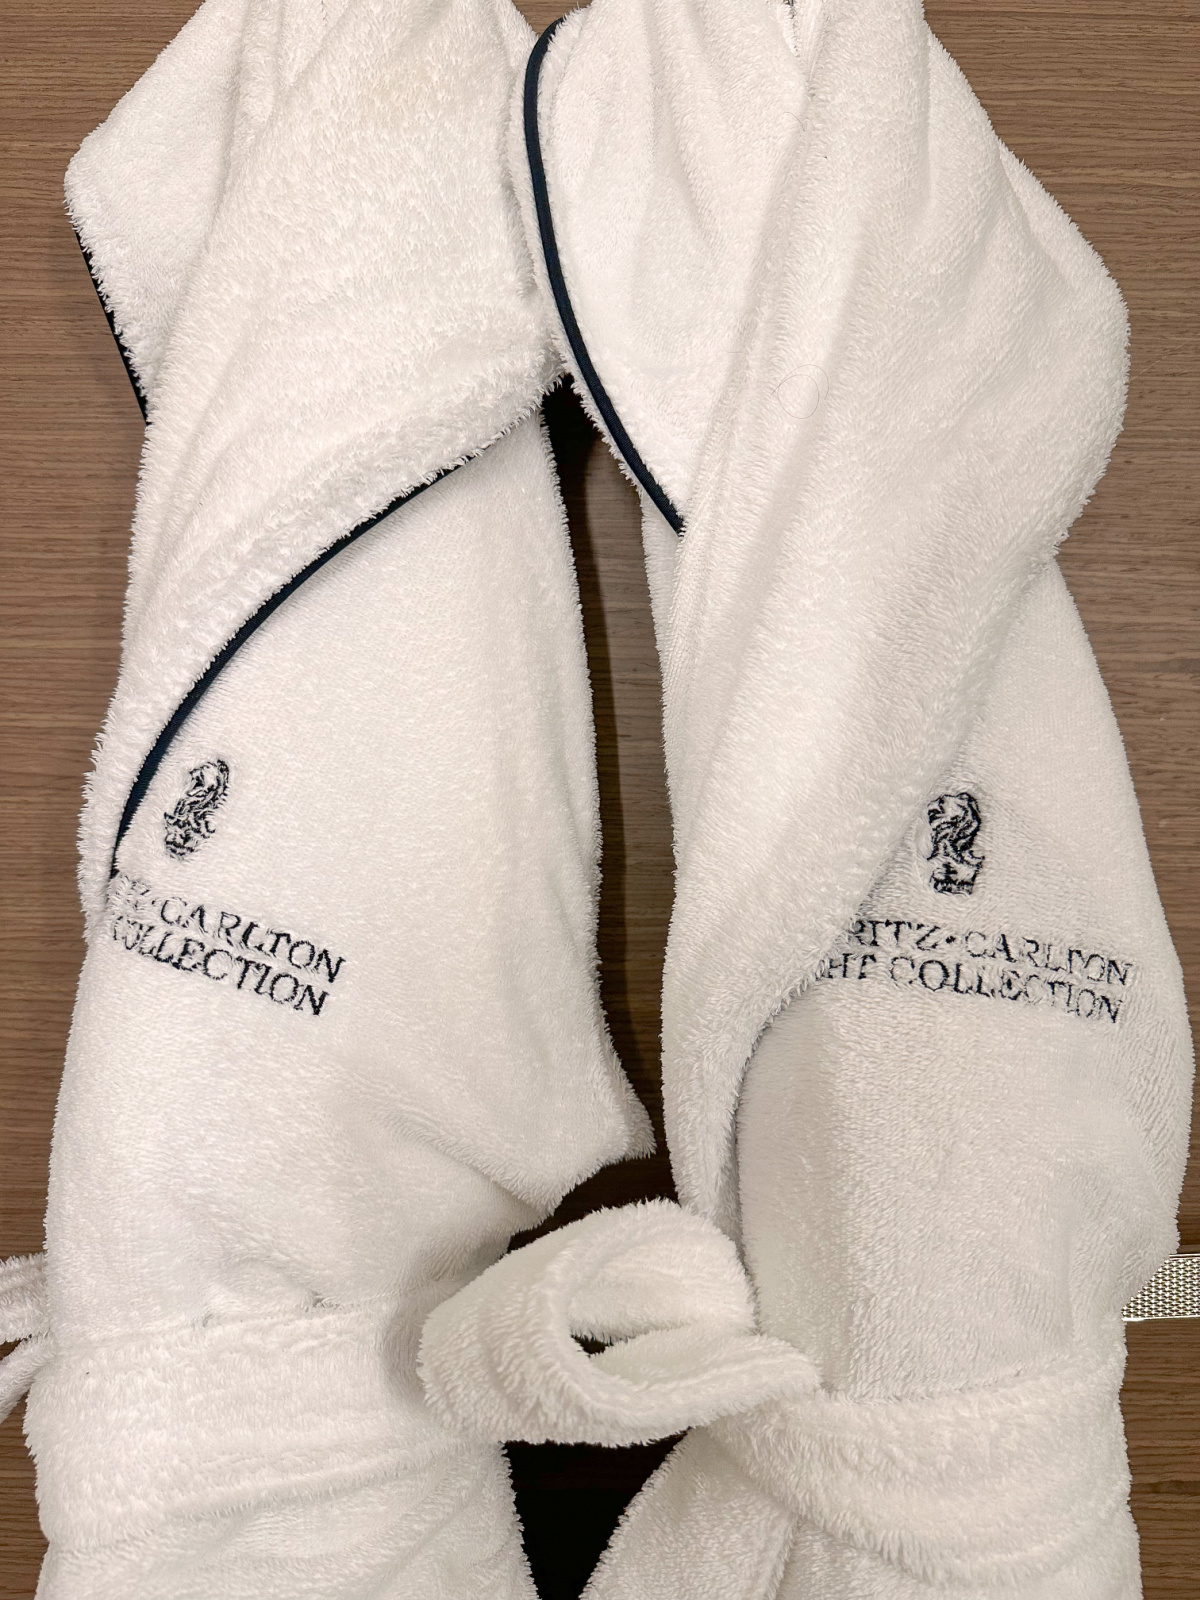 Ritz Carlton Yacht Collection bathrobes hanging on back of dor.